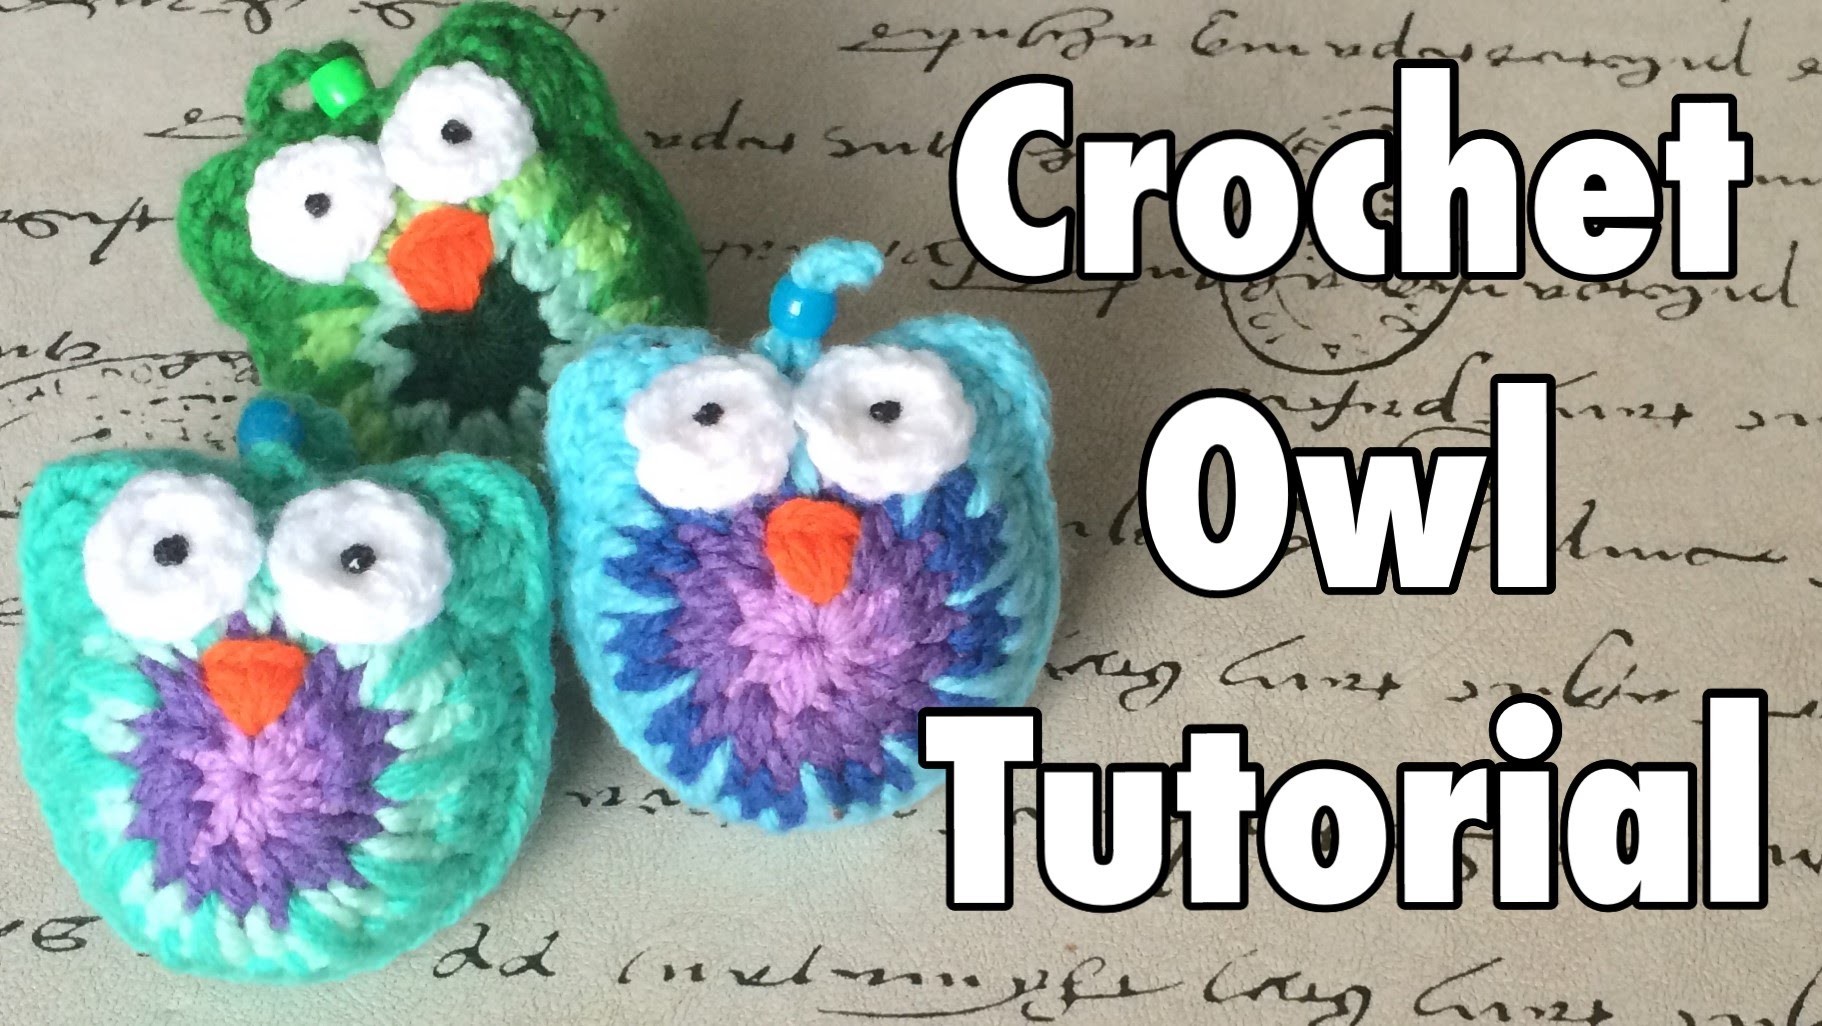 Tutorial: Buho a Crochet - Crochet Owl (English Subtitles)